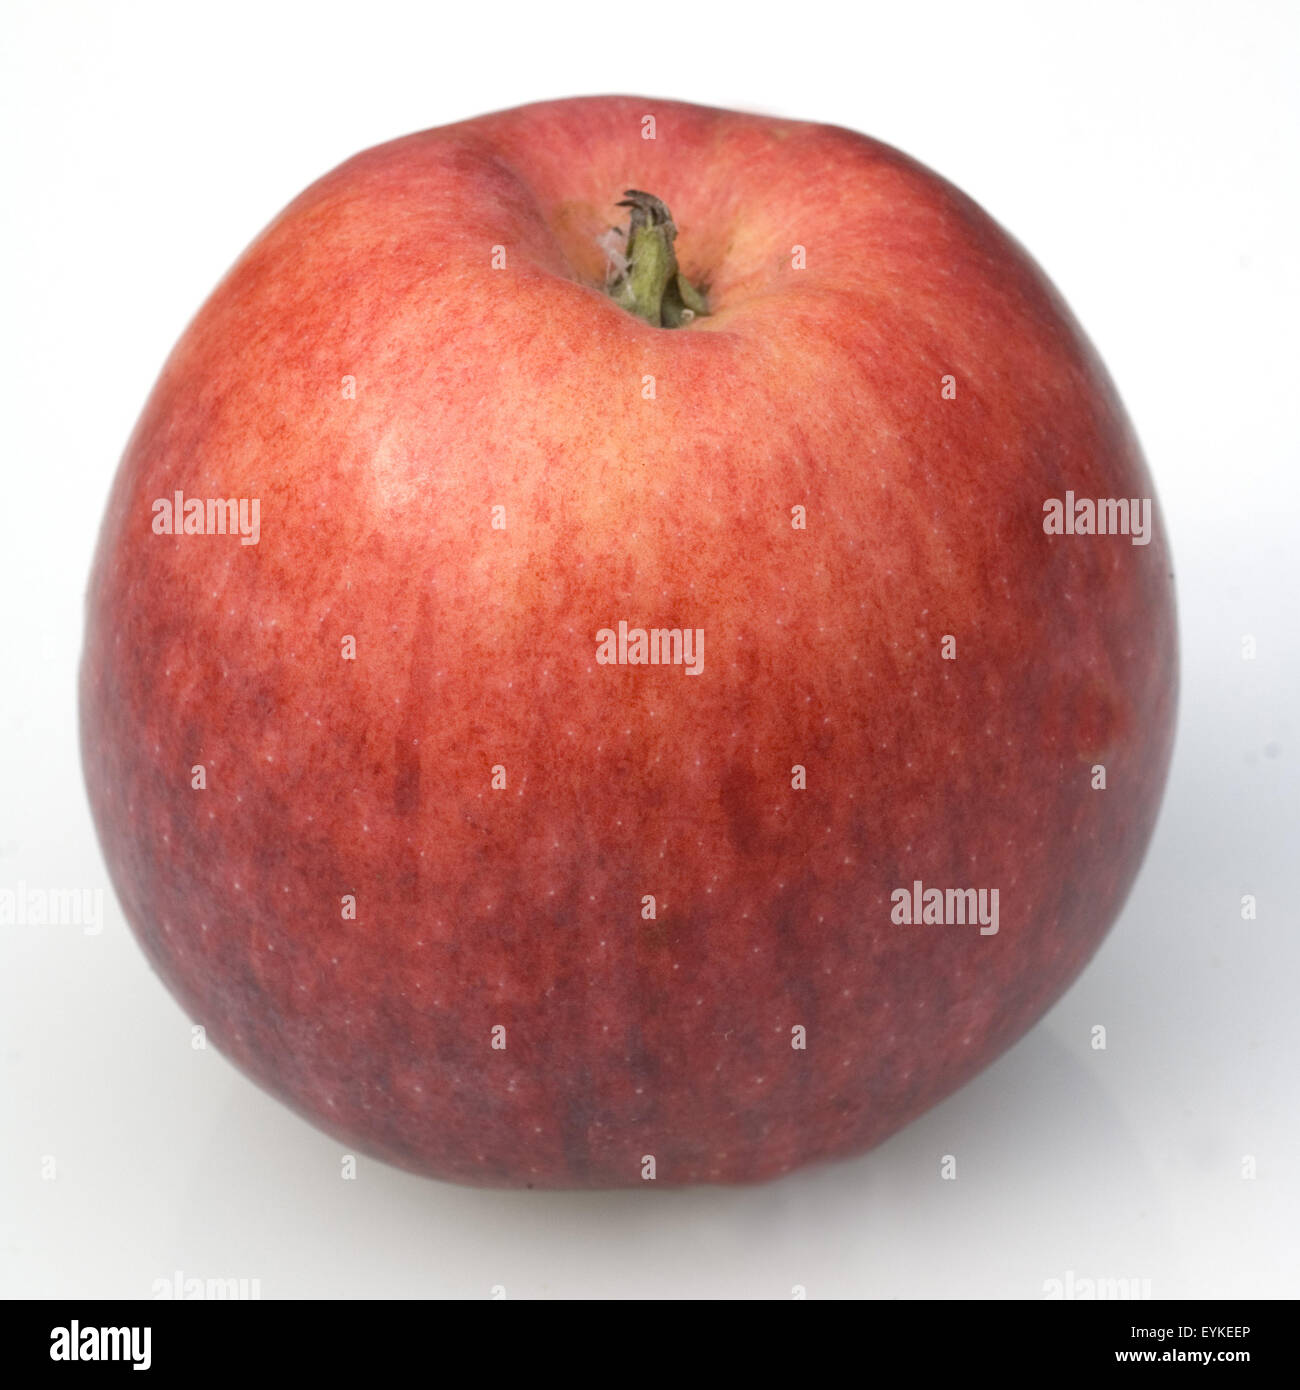 Early Blaze Apfel, Apfelsorte, Apfel, Kernobst, Obst Stock Photo - Alamy